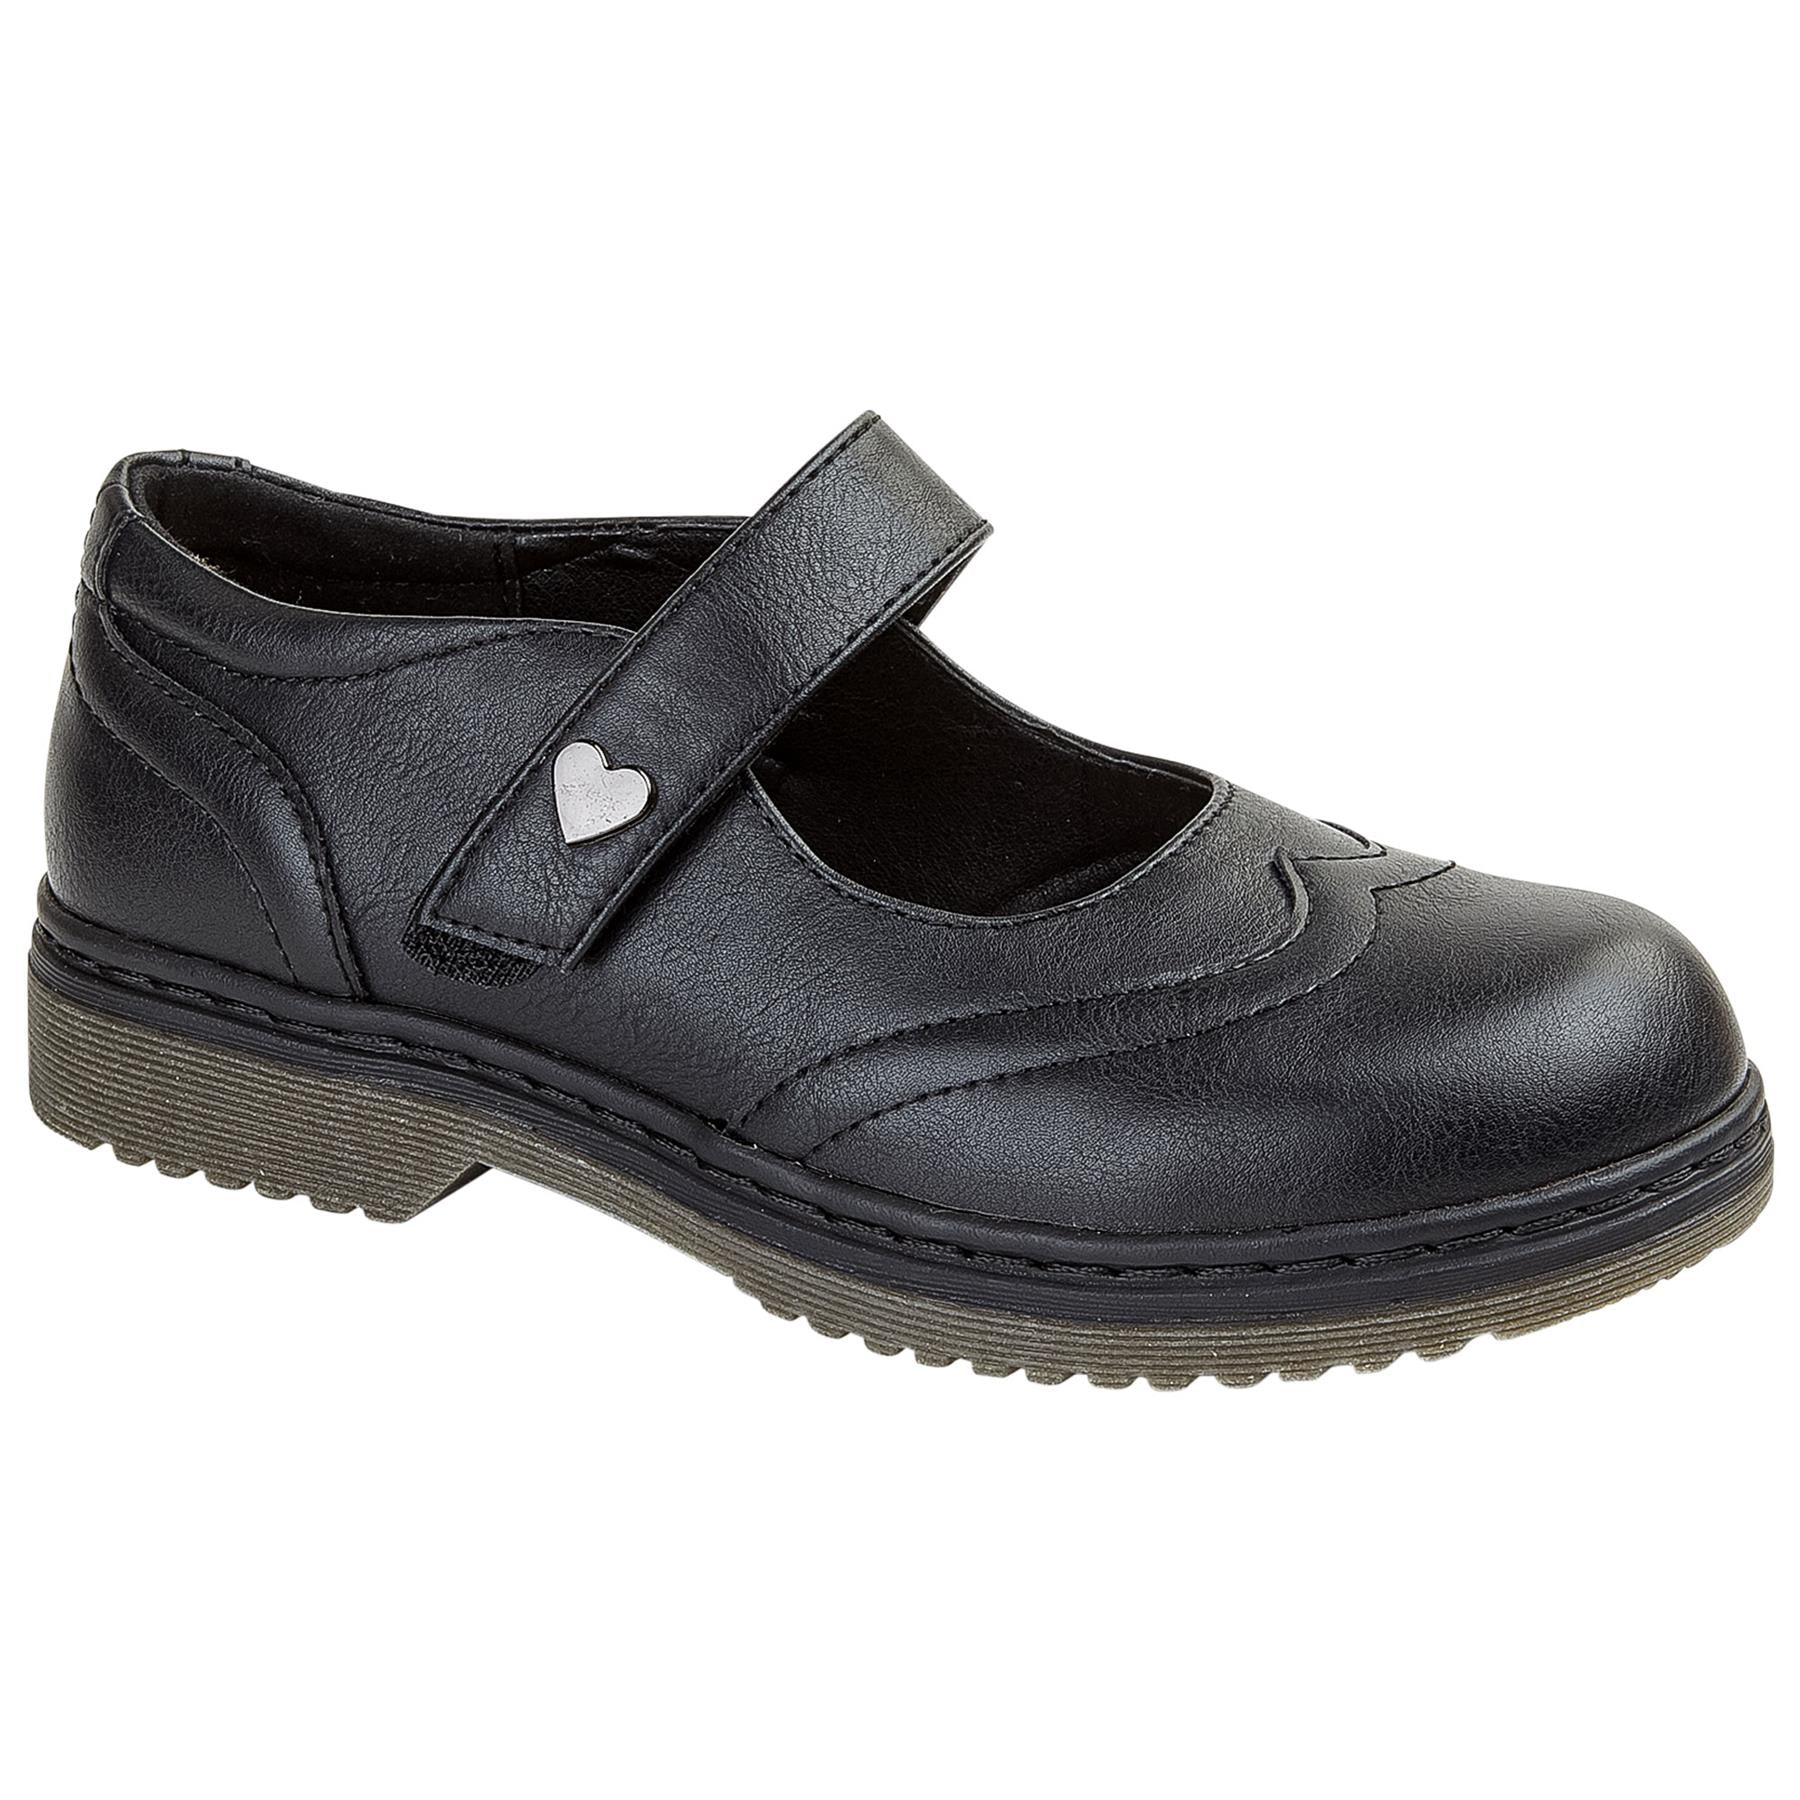 A2Z 4 Kids Girls Mary Jane School Shoes PU Leather Ballet Flat Low Heel Loafers